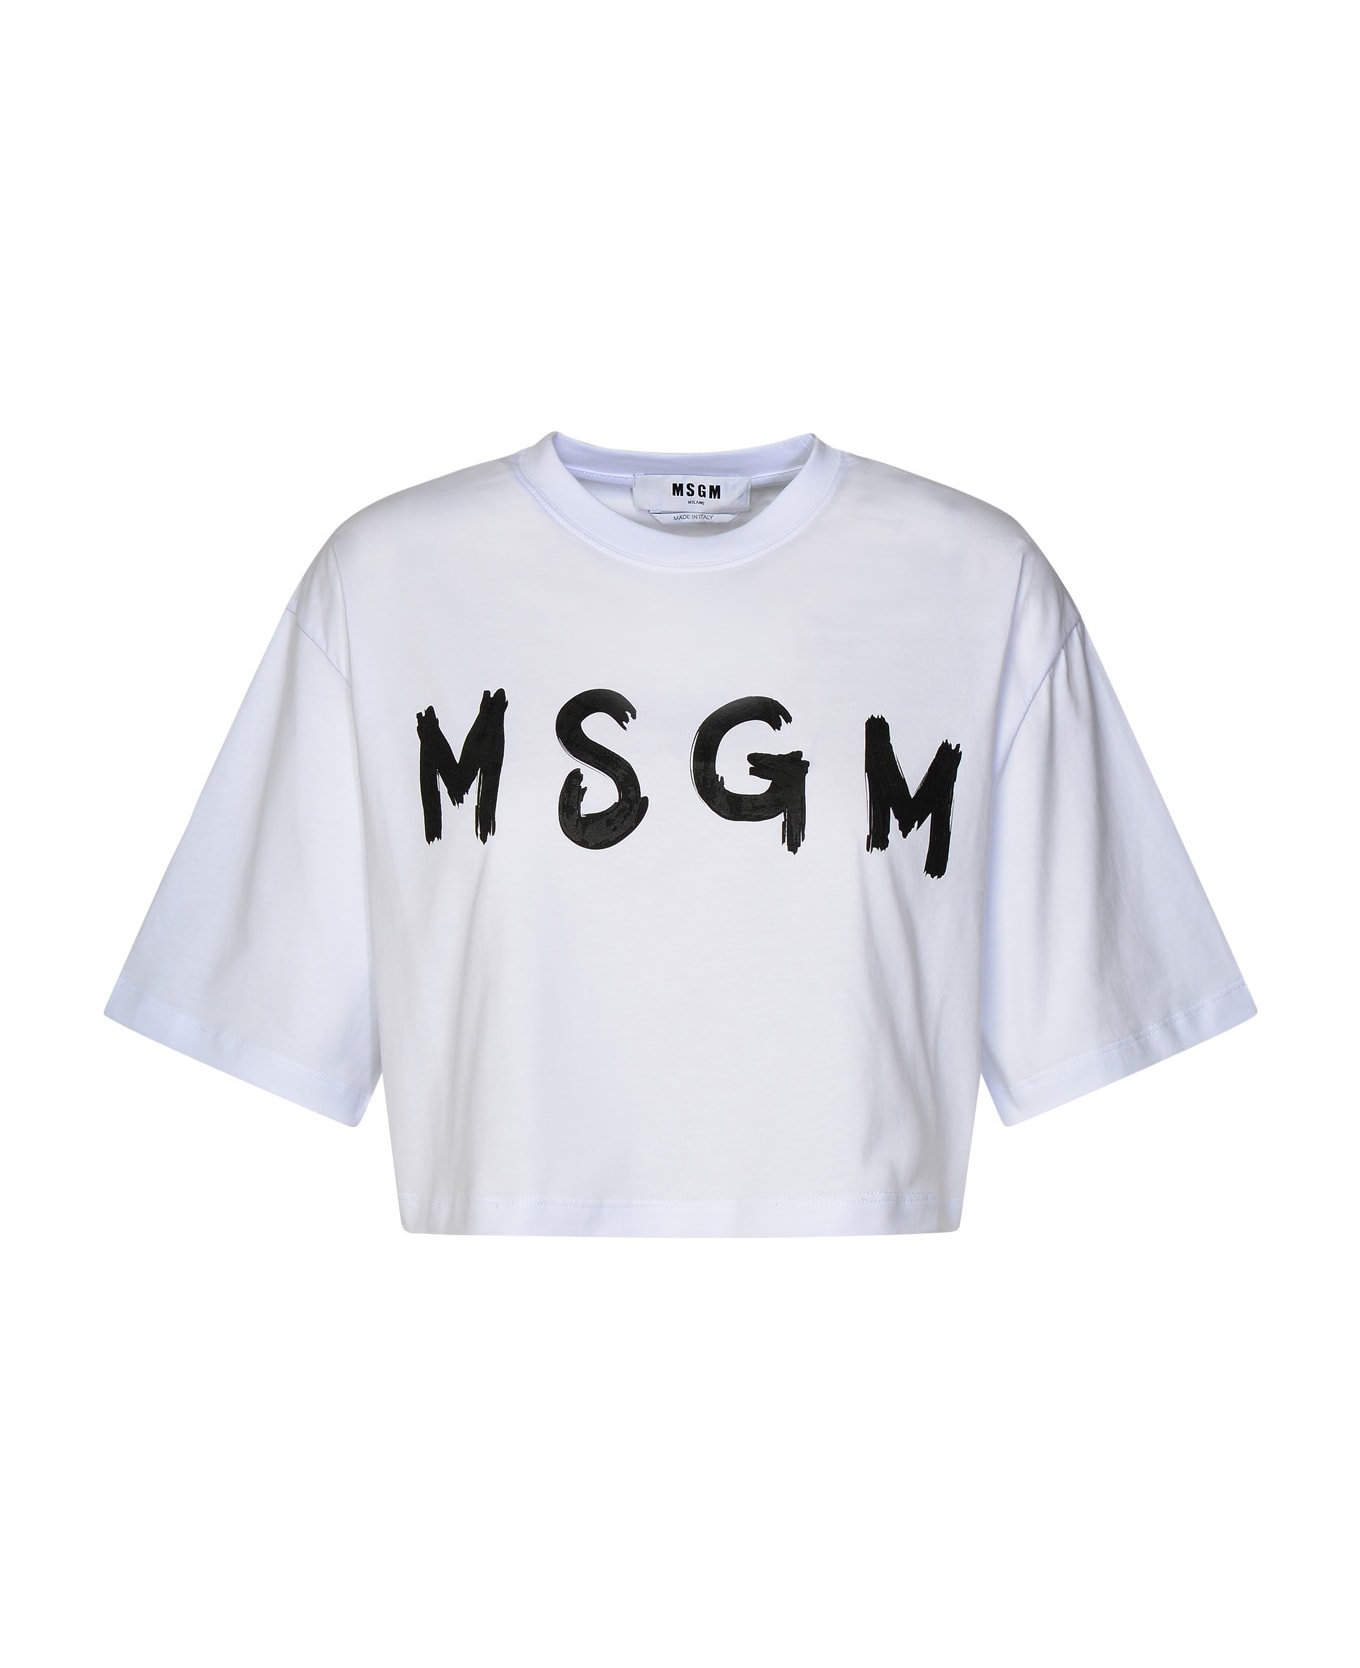 MSGM White Cotton T-shirt MSGM